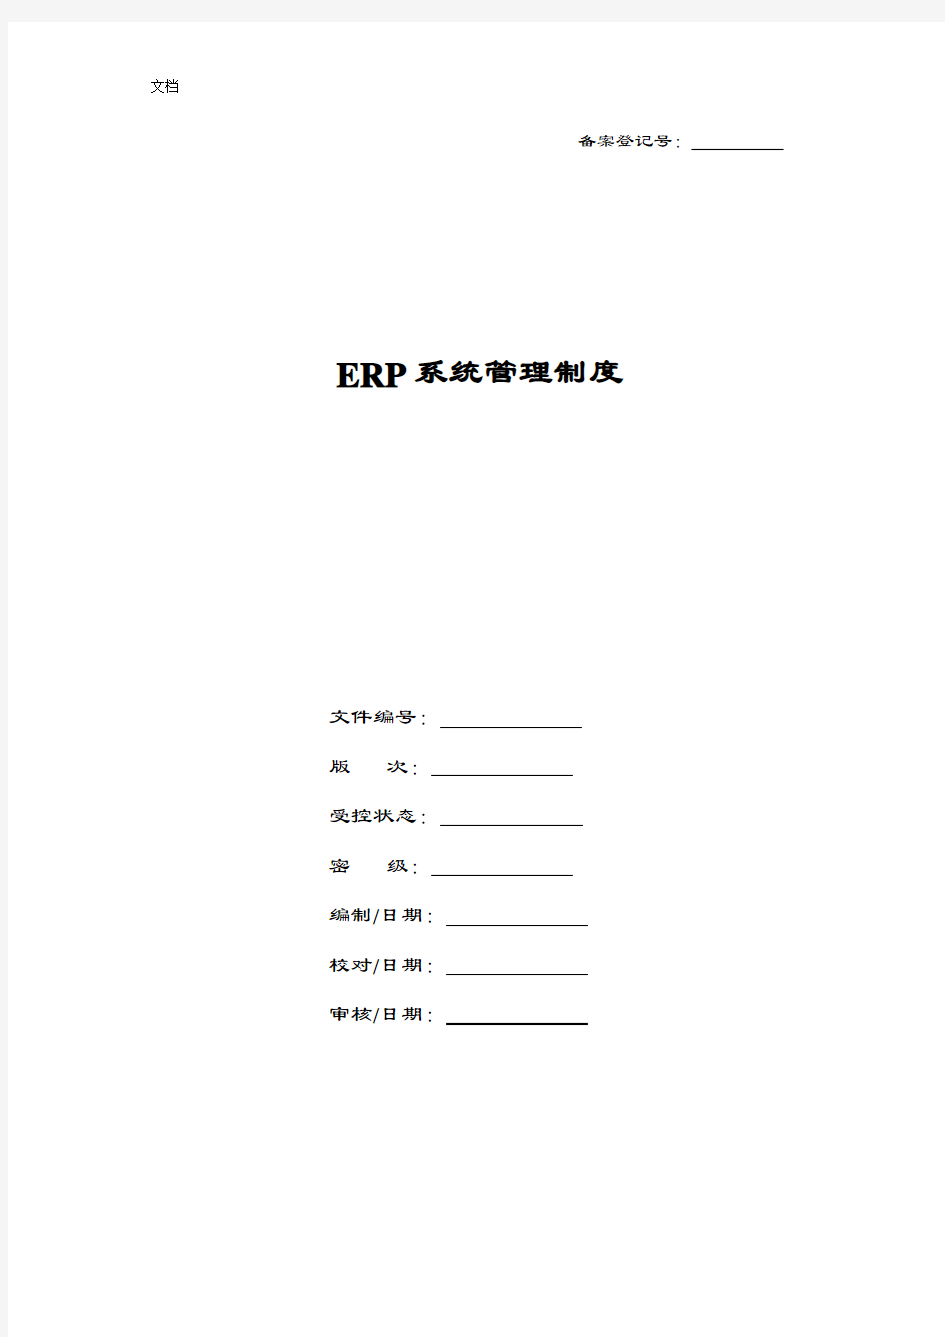 ERP系统管理系统规章制度